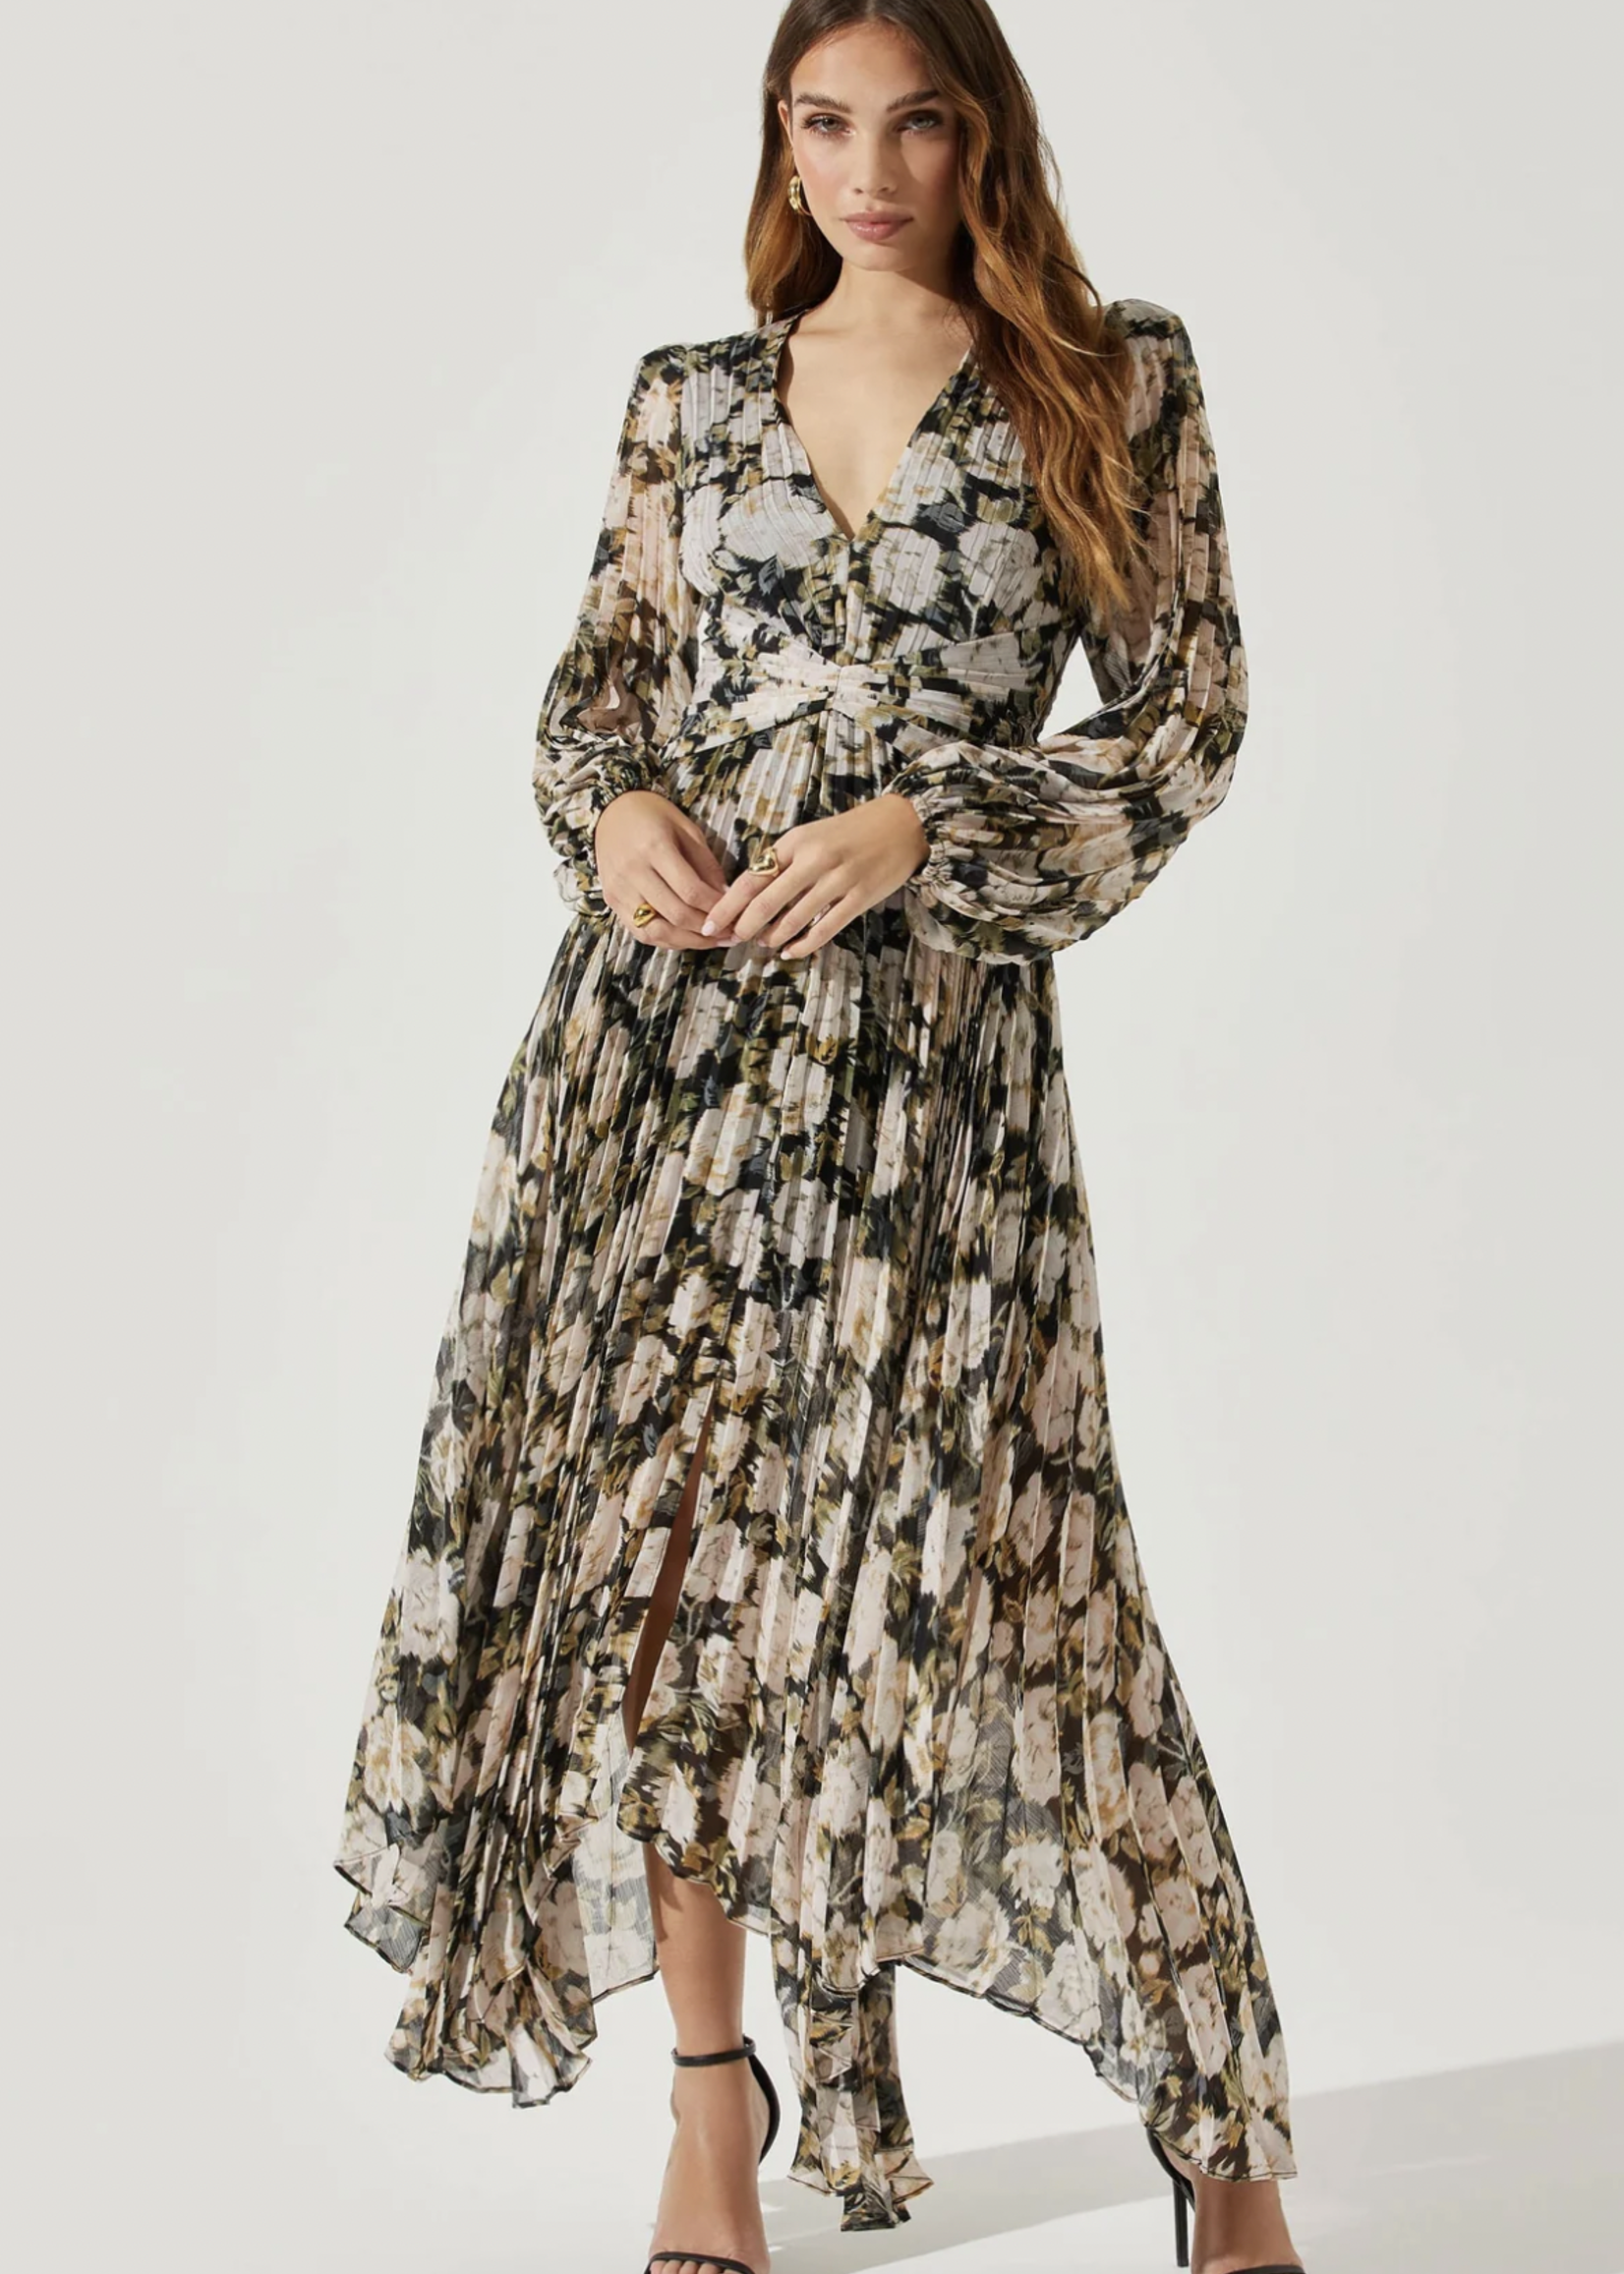 Elitaire Boutique Ayana Dress in Cream & Black Floral